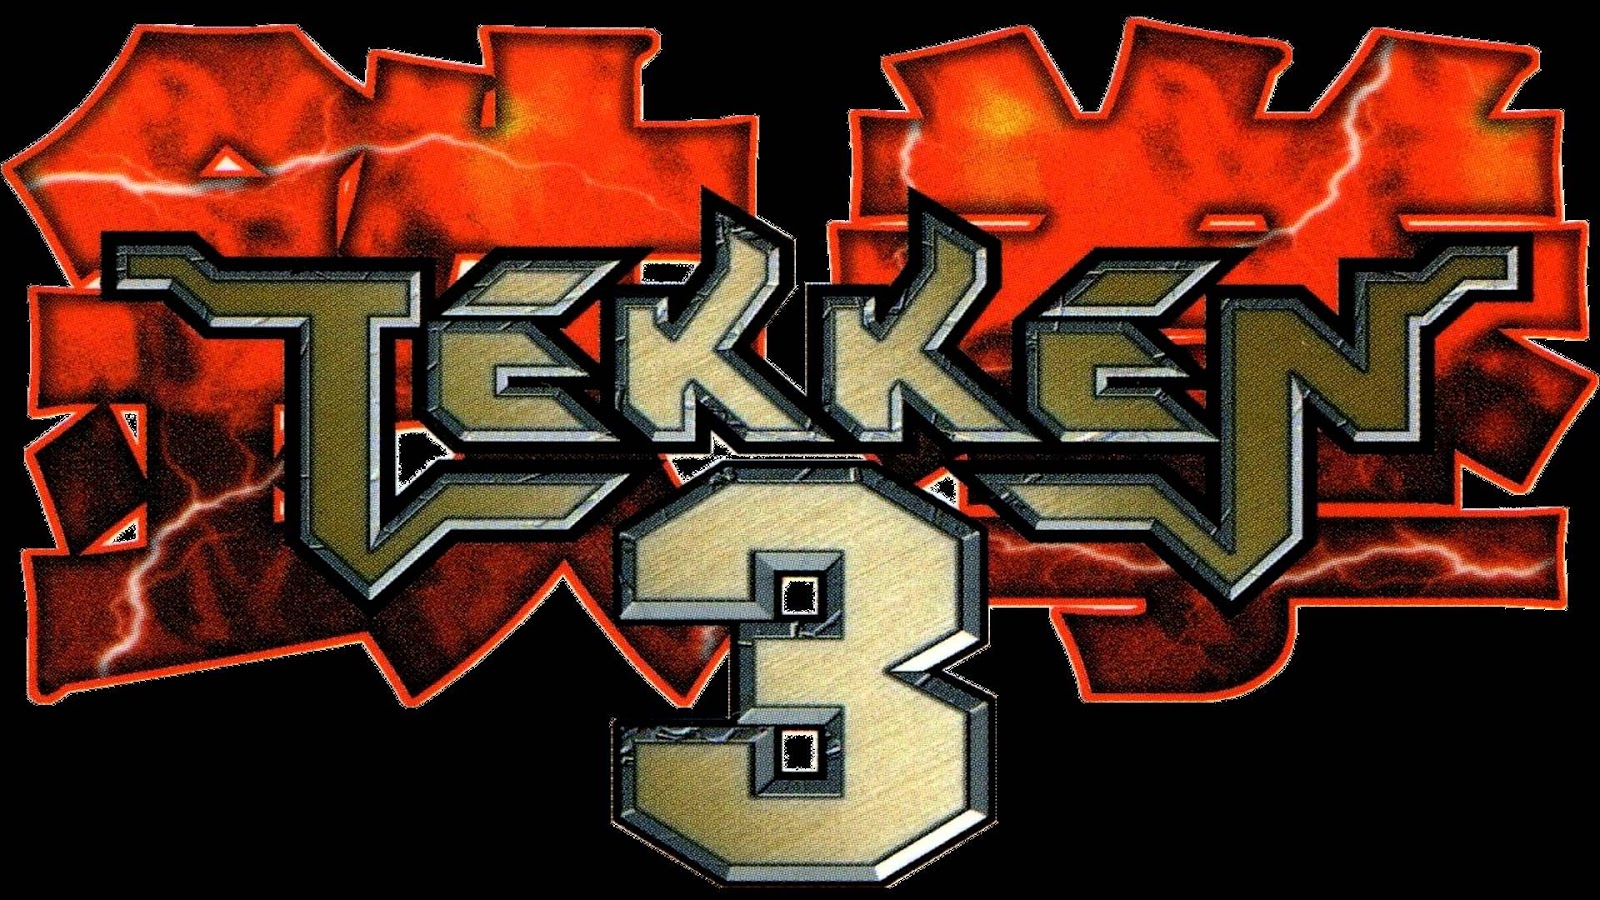 tekken 3 mobile game free download android